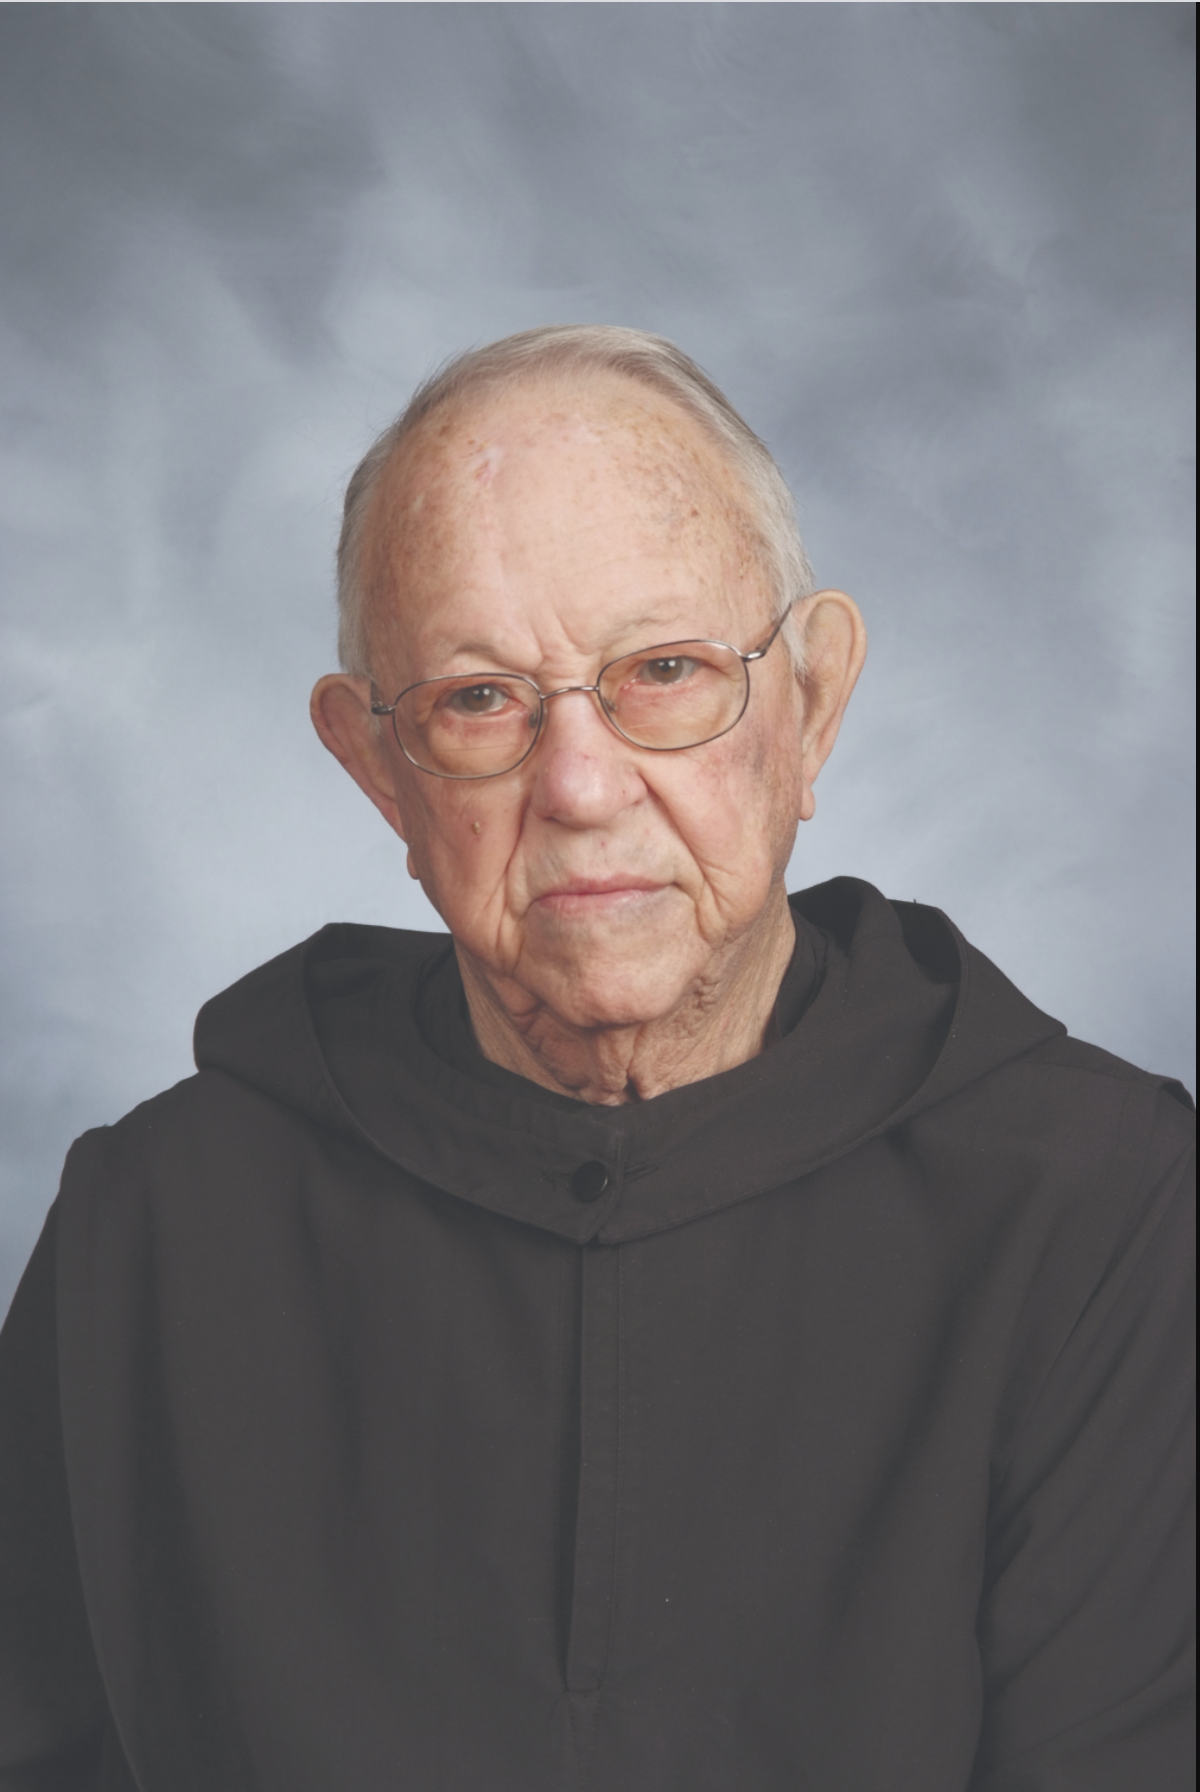 Father Joseph James Heyd - 05/01/30-04/04/13